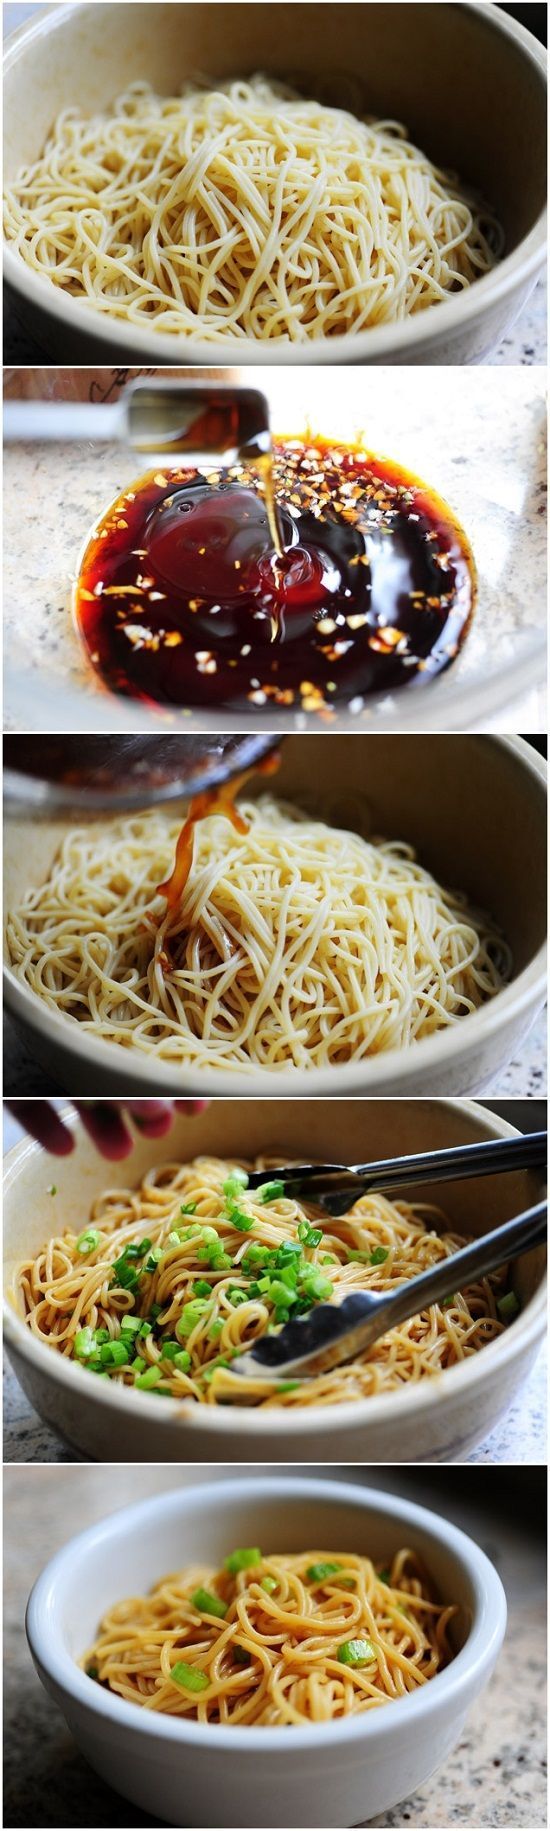 Simple Sesame Noodles. This